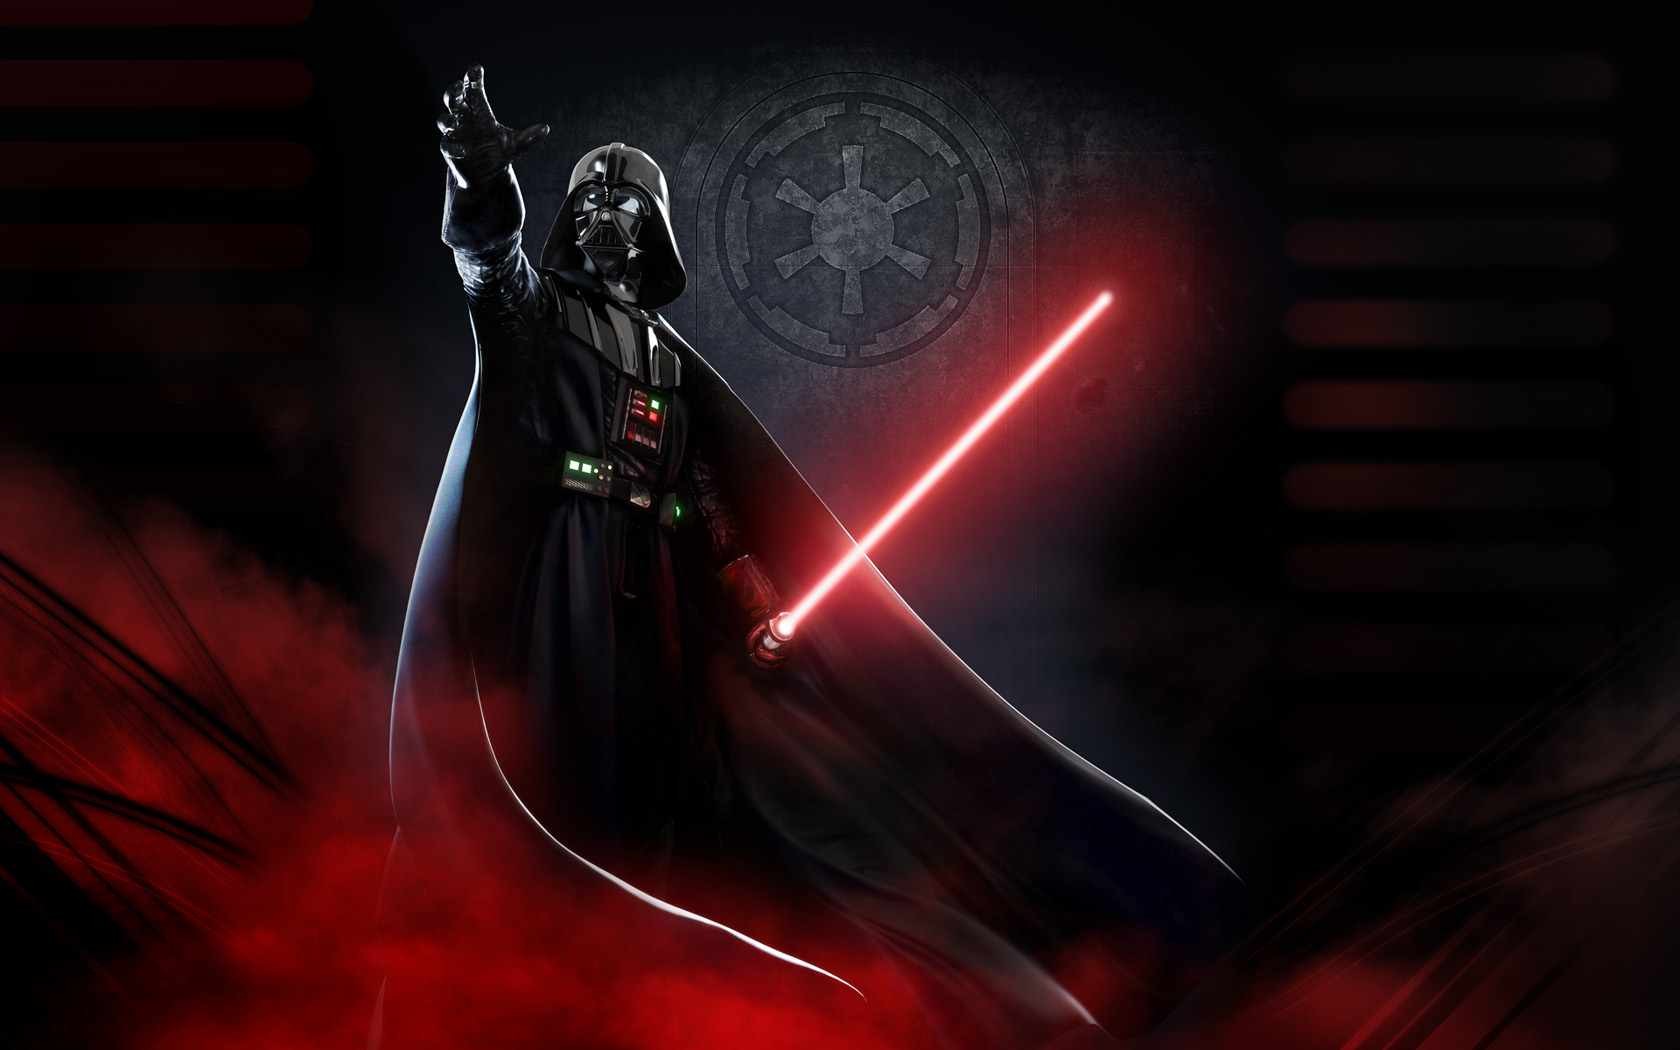 General 1680x1050 Star Wars Sith lightsaber artwork Star Wars Villains science fiction Darth Vader movie characters